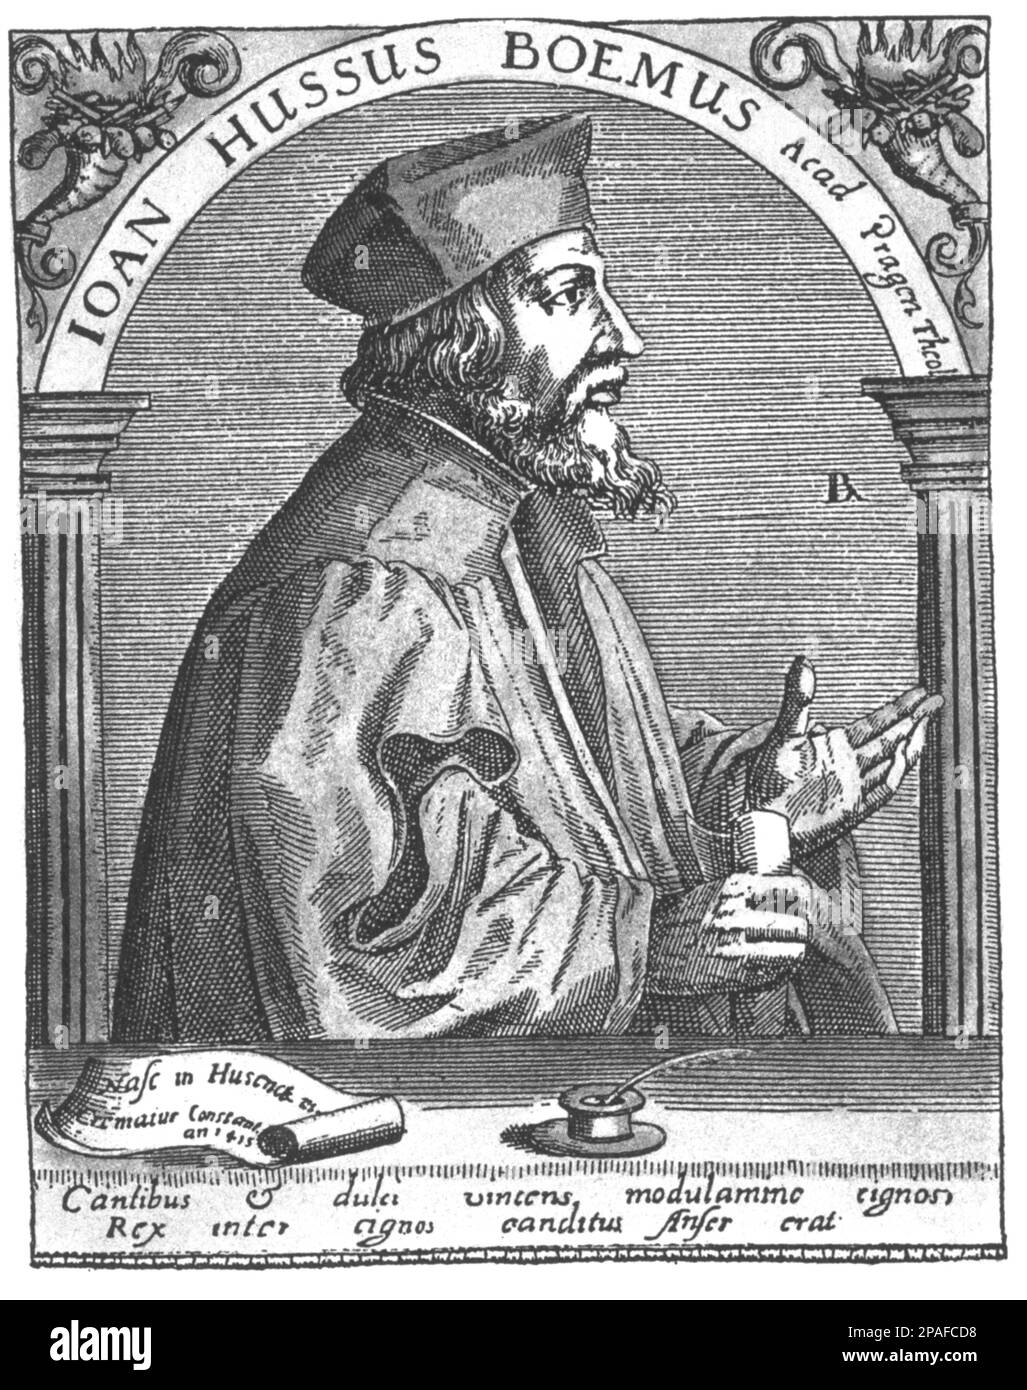 Der Künstlerreformer JAN HUS ( Husinec , Bohemia 1386 Ca - Constanz 1415 ). Gravur XVII. Jahrhundert - RELIGIONE PROTESTANTE LUTERANA RIFORMATA - REFORMIERTE RELIGION - ritratto - Porträt - Profil - profilo - Hut - CALVINO - CALVINISTA - CALVINIST - CALVINISMO - CALVINISMUS - Inzisione - Bart - barba ---- ARCHIVIO GBB Stockfoto